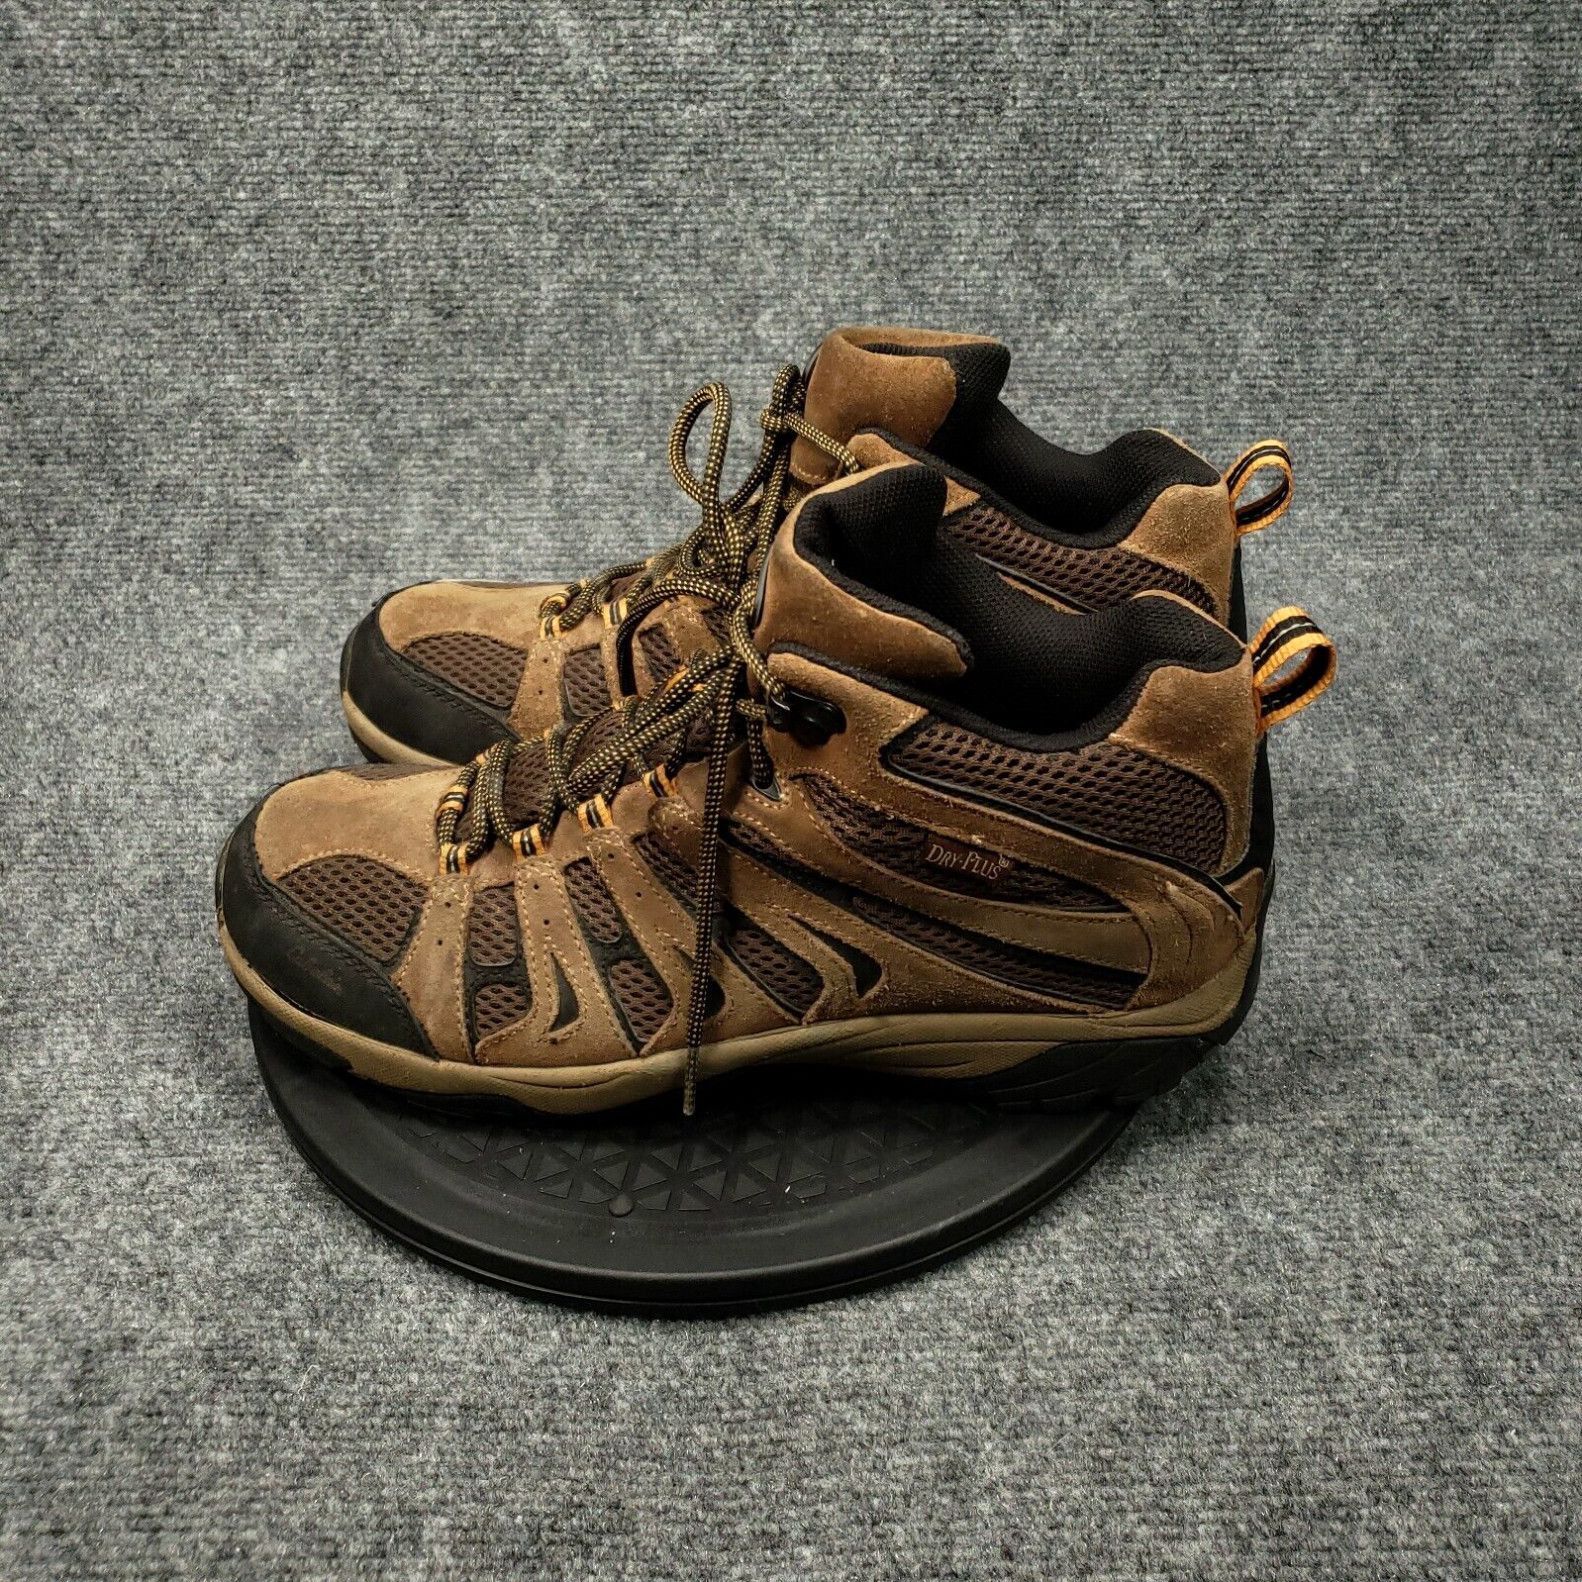 Cabela's Outdoor Rubber Boots for Men - Black - 9M